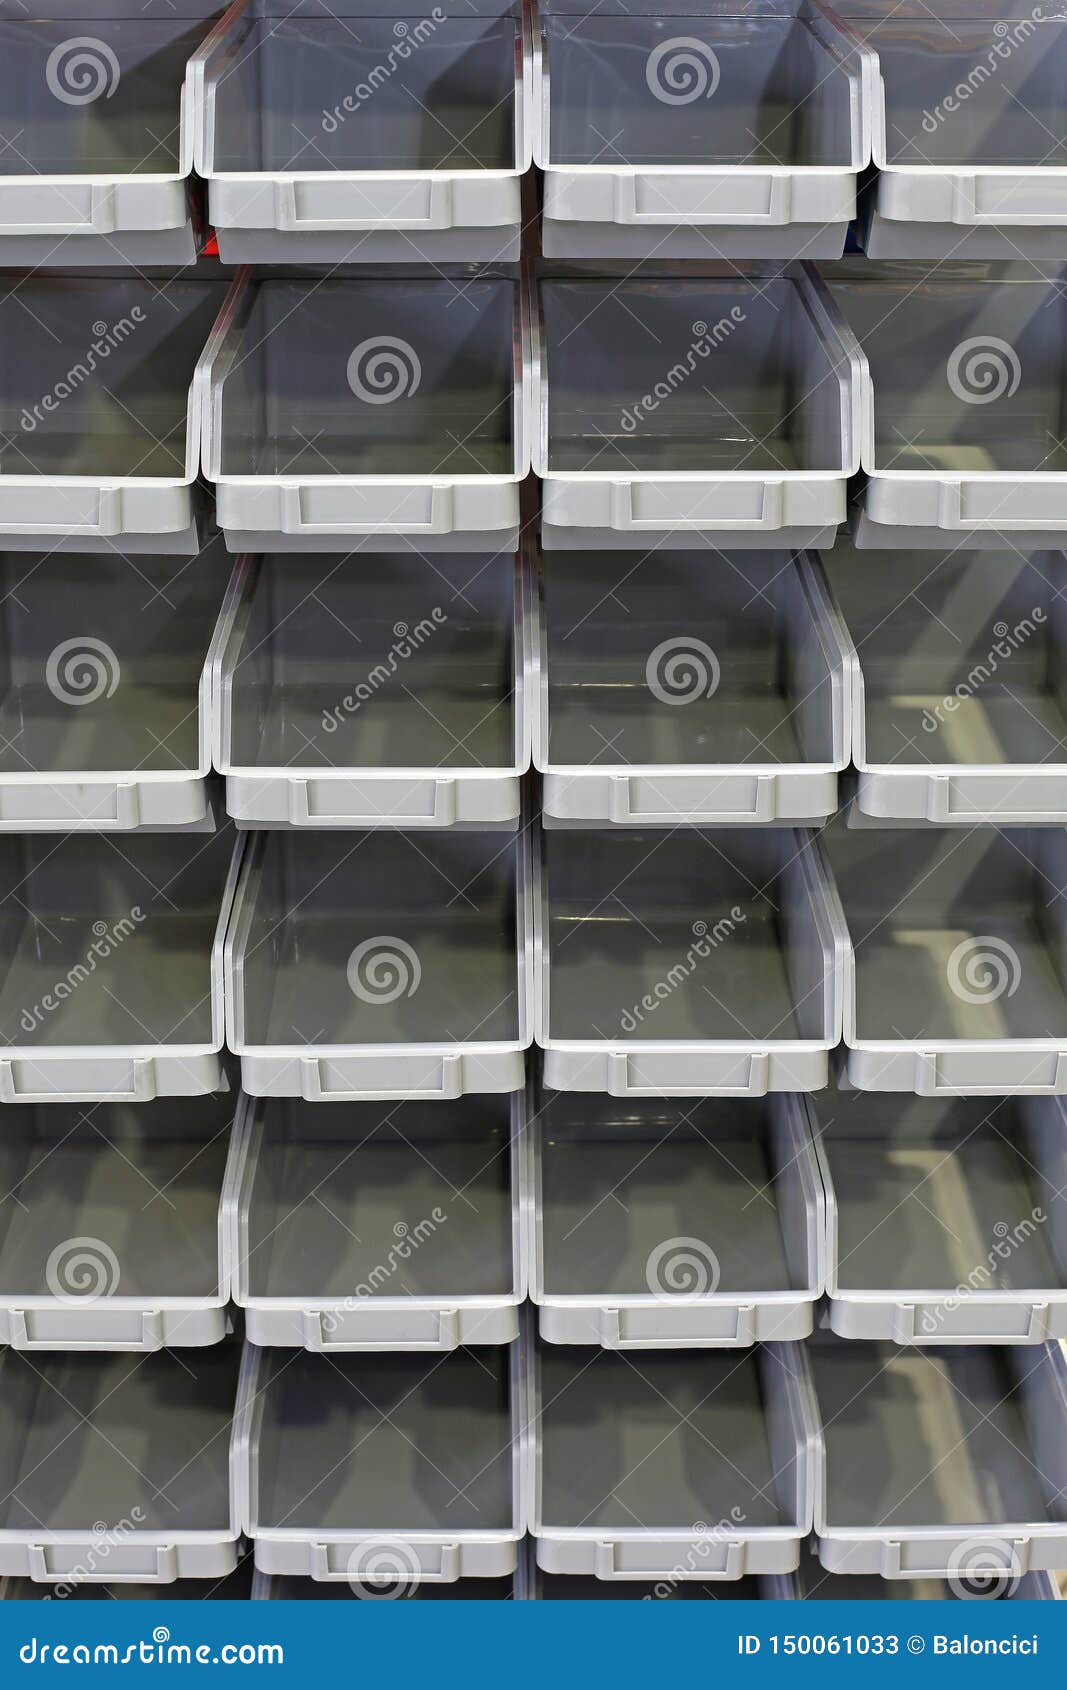 Parts Storage Organizer stock image. Image of rack, store - 150061033